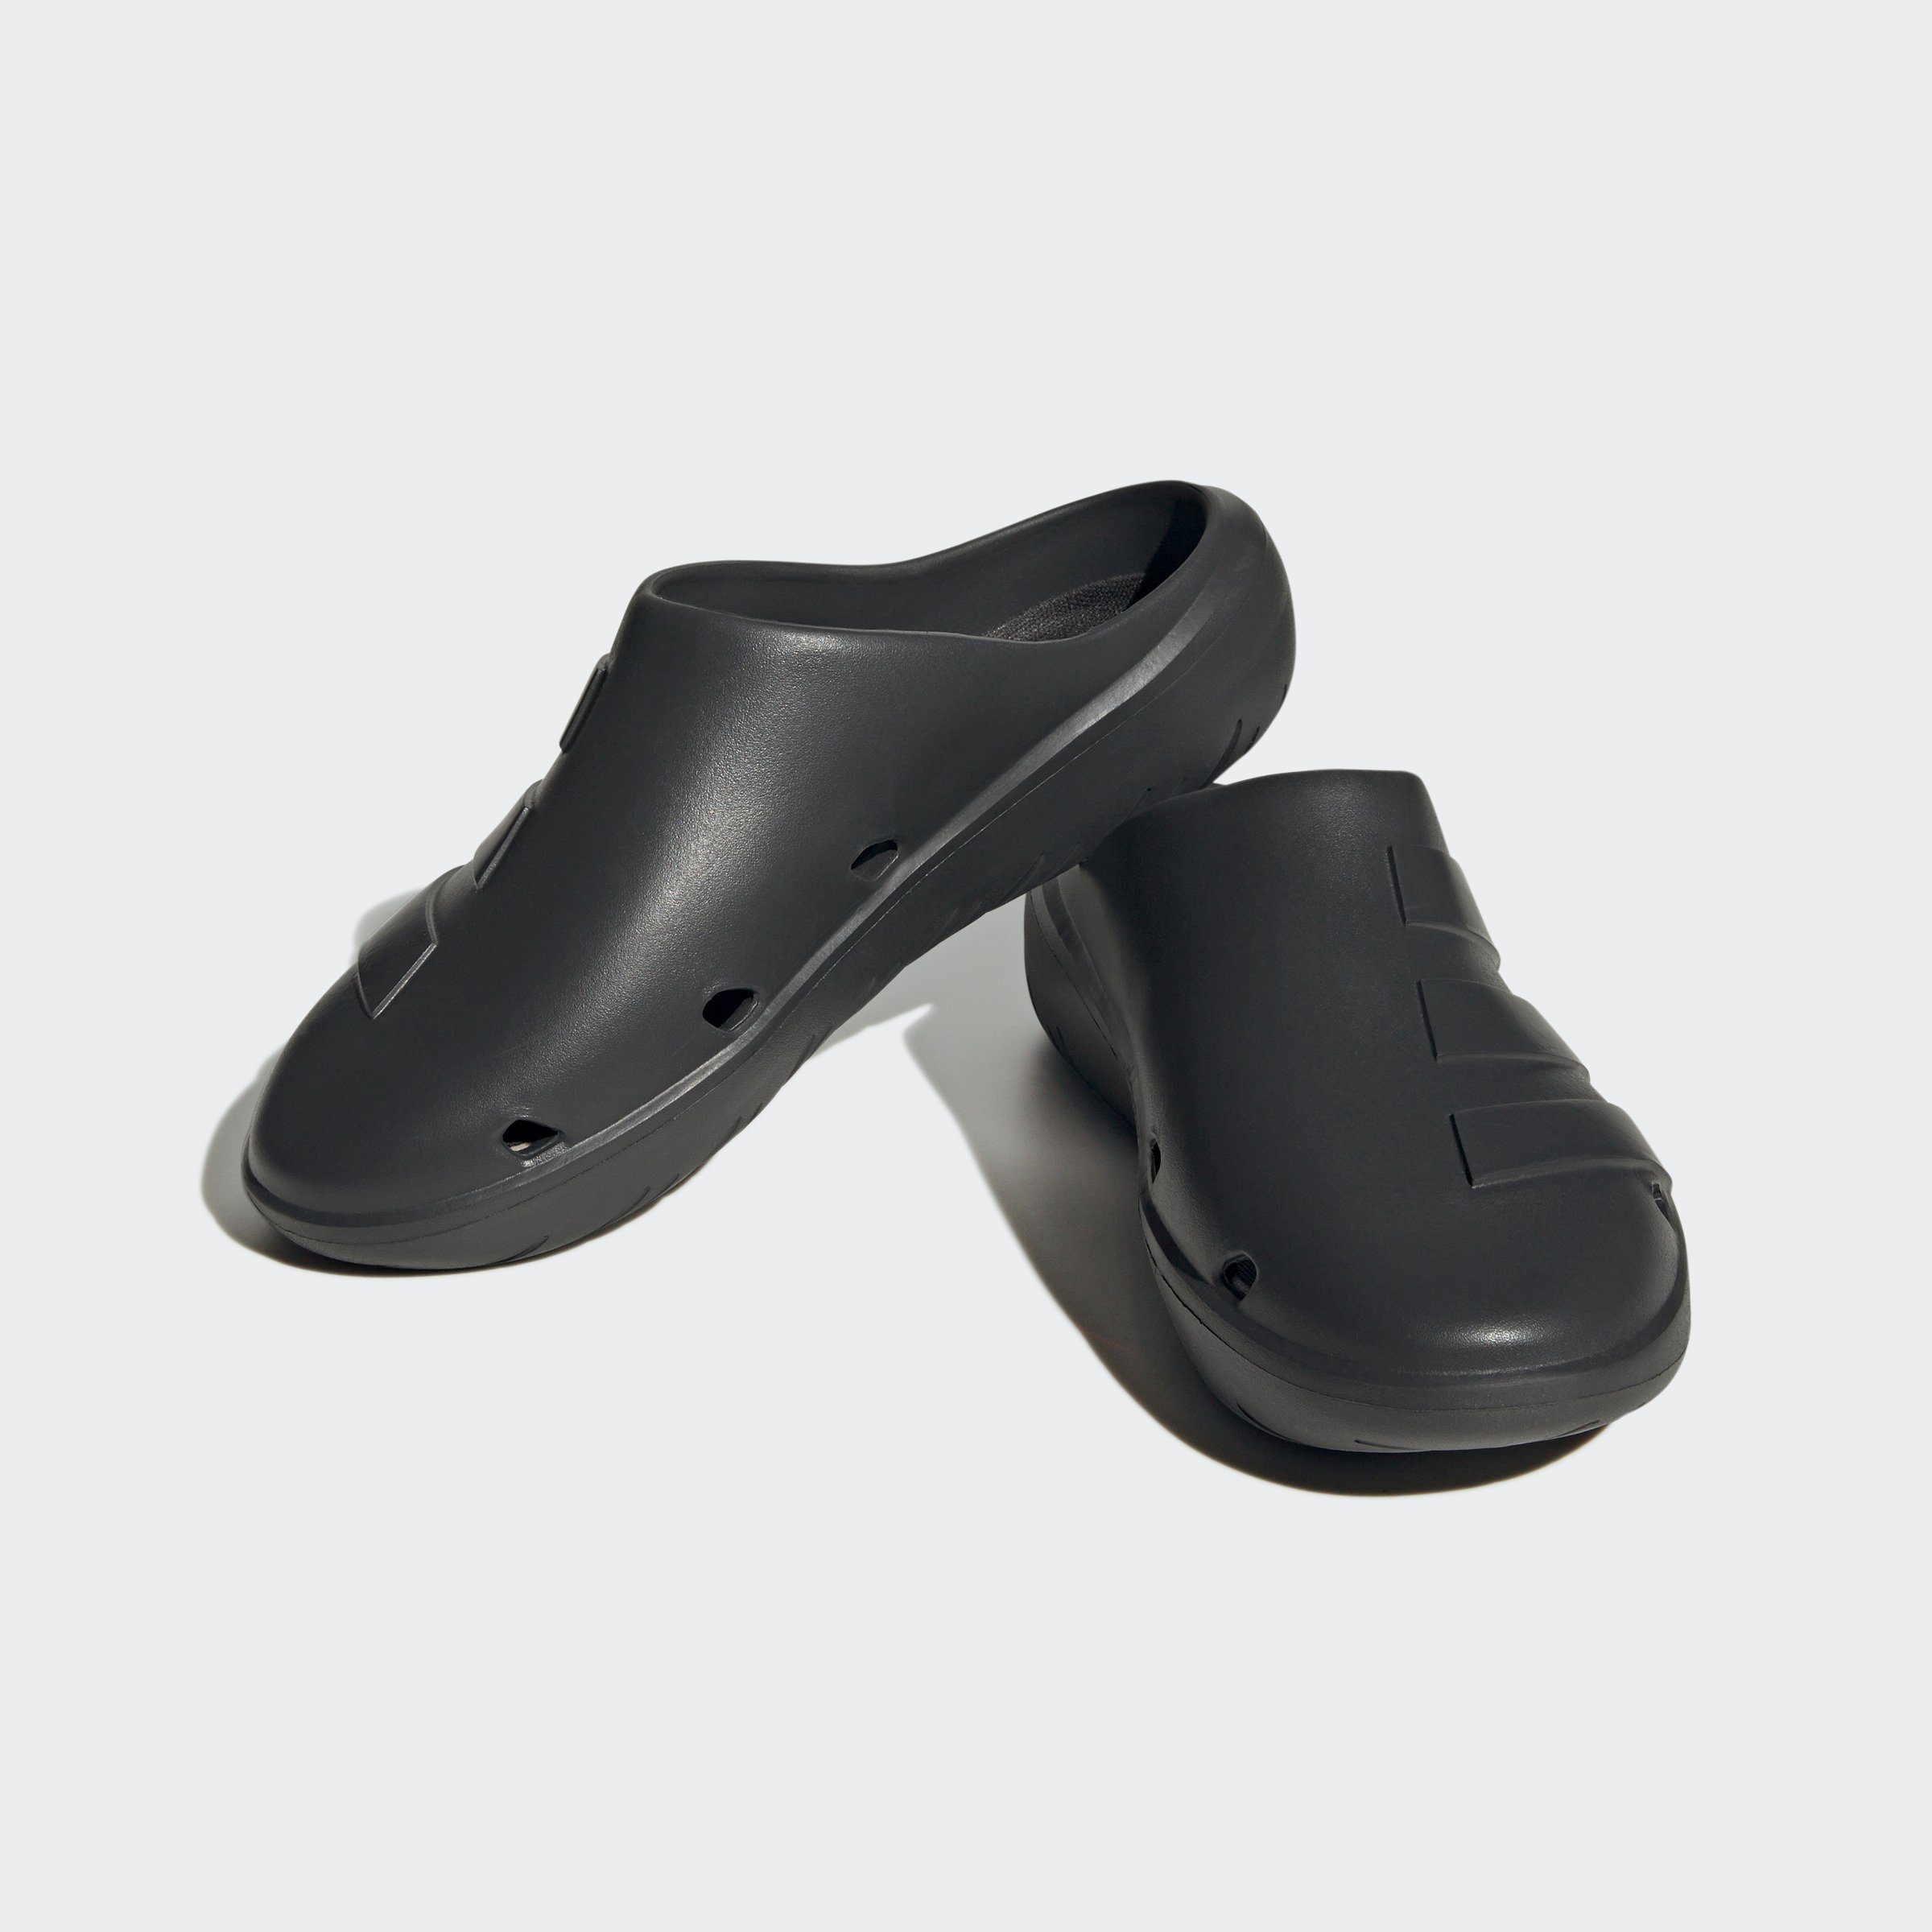 Core CLOG adidas / Clog Carbon Black Sportswear / ADICANE Carbon